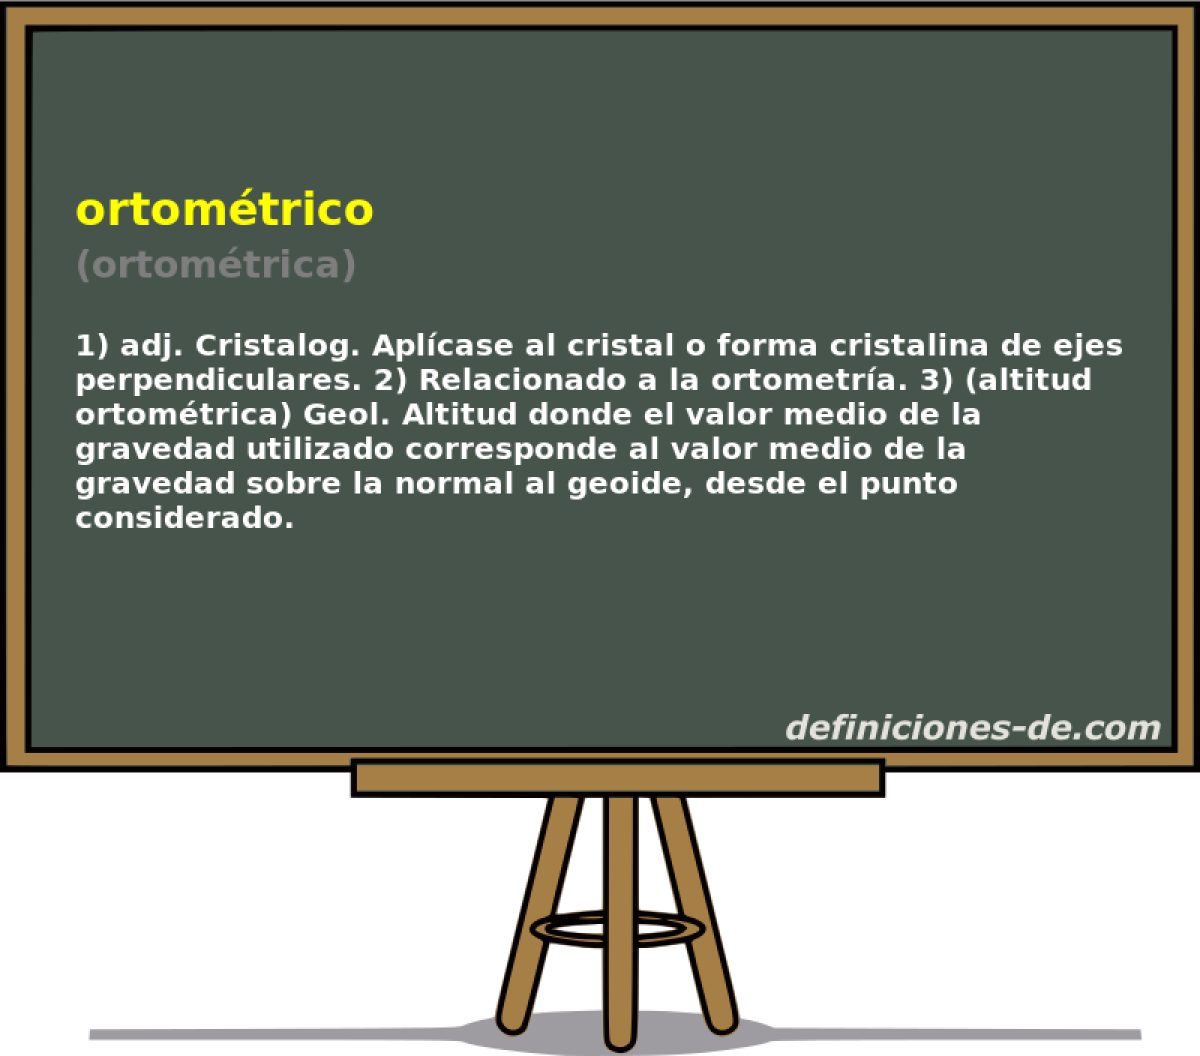 ortomtrico (ortomtrica)